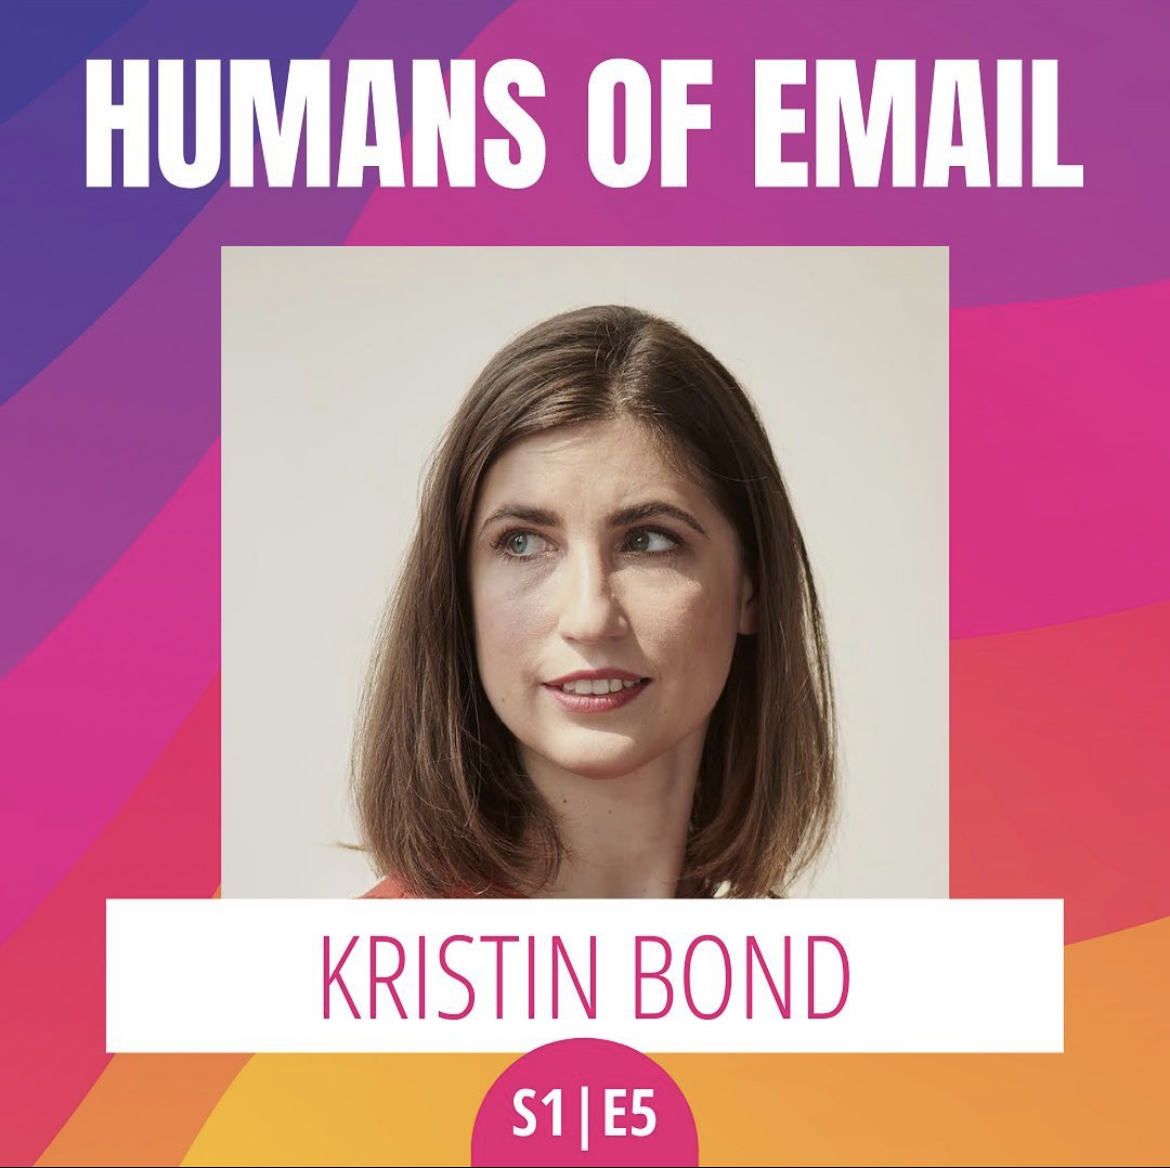 Kristin Bond